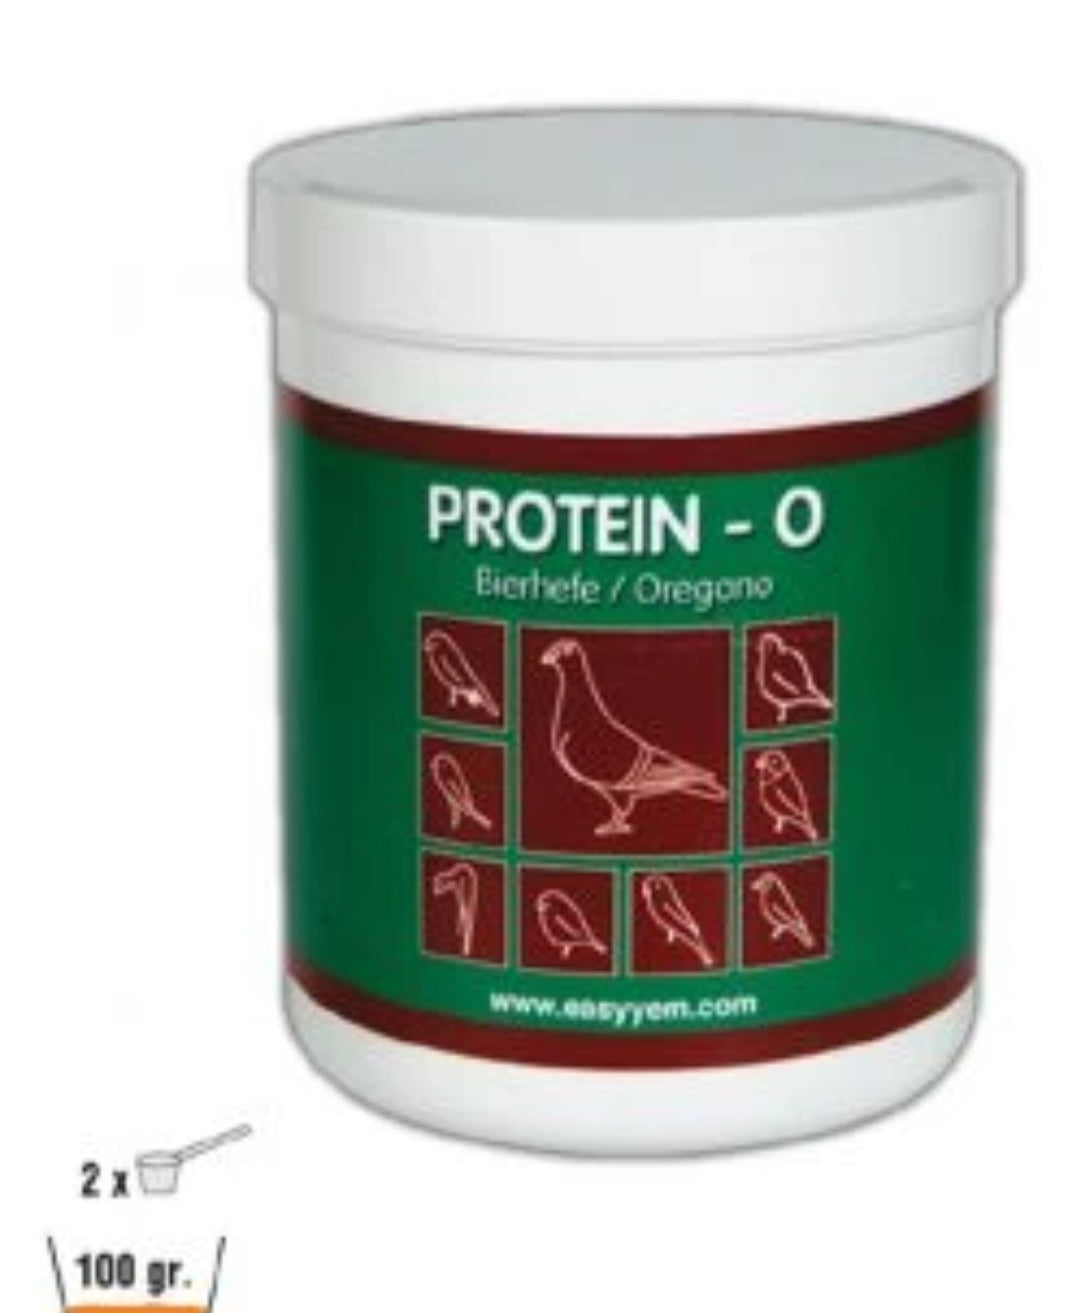 Protein-O, Biergist en Oregano 250 gram